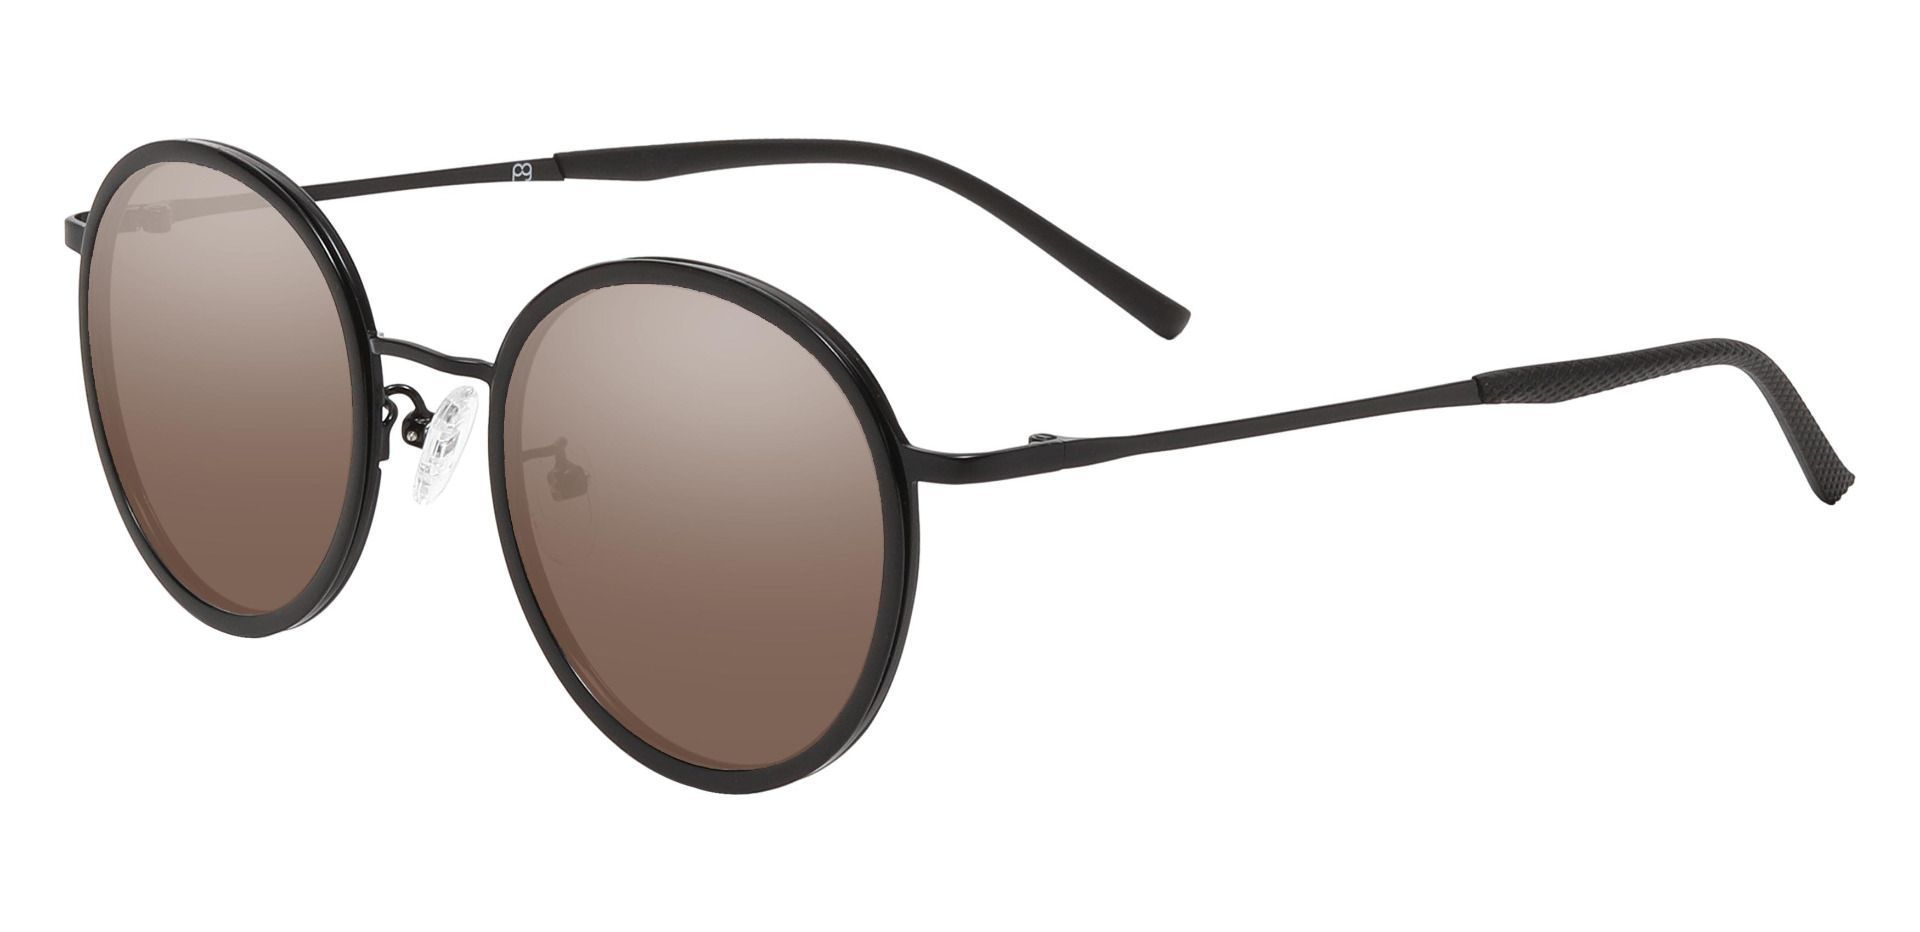 Brunswick Round Reading Sunglasses - Black Frame With Brown Lenses